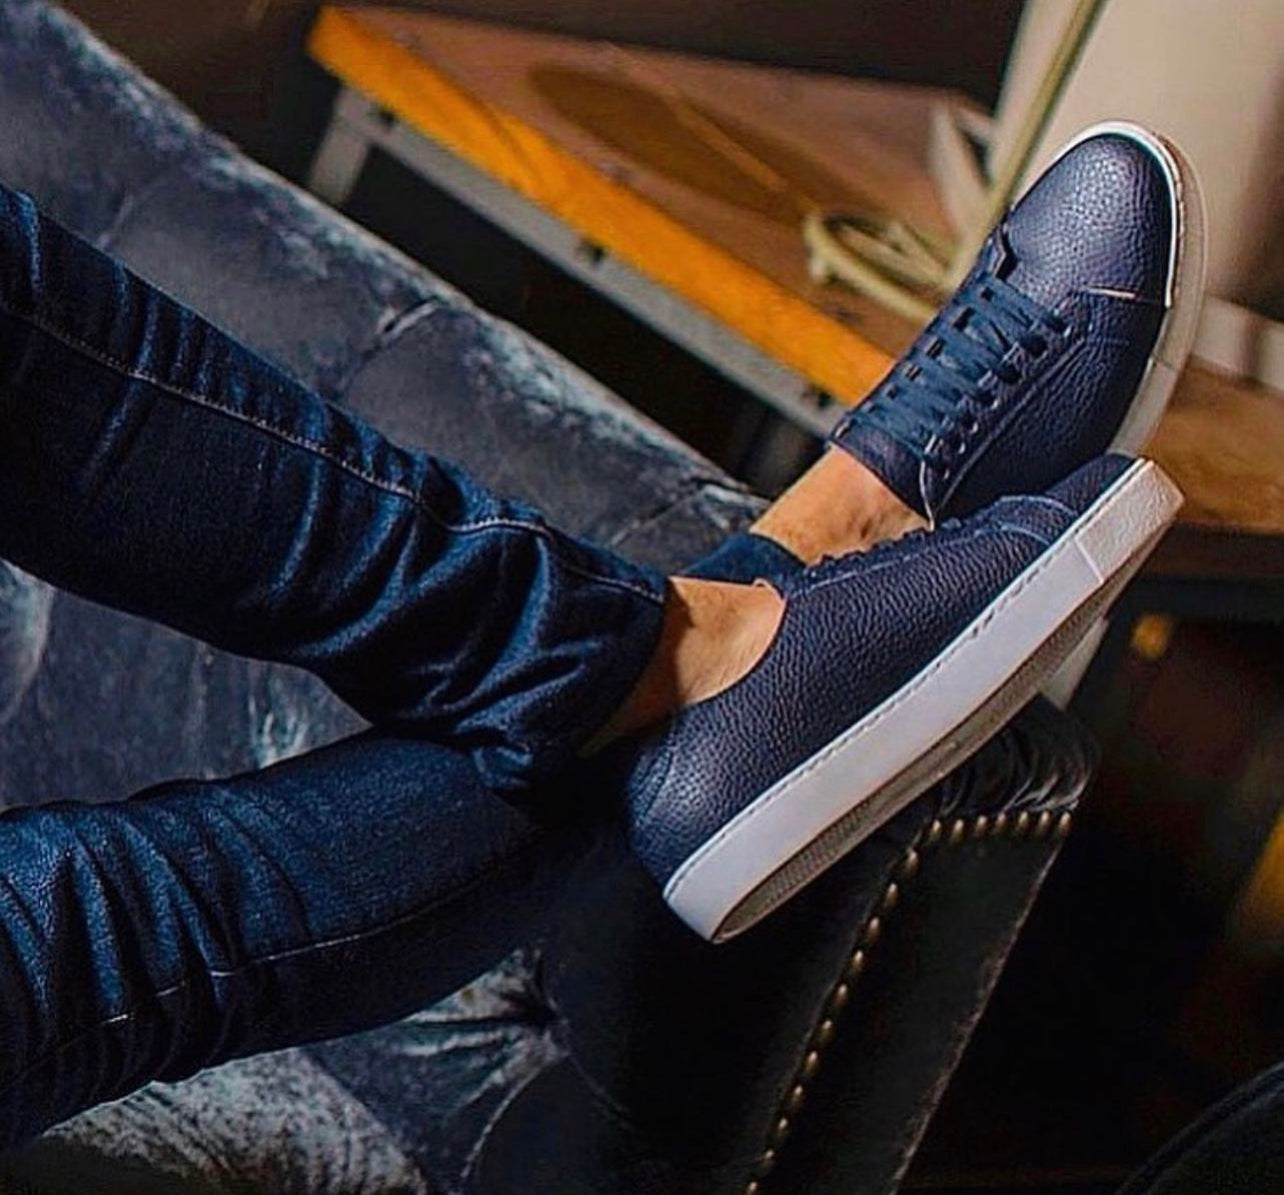 Mexican Handmade Premium Leather Men Sneakers- Moreno Blue Colores Decor